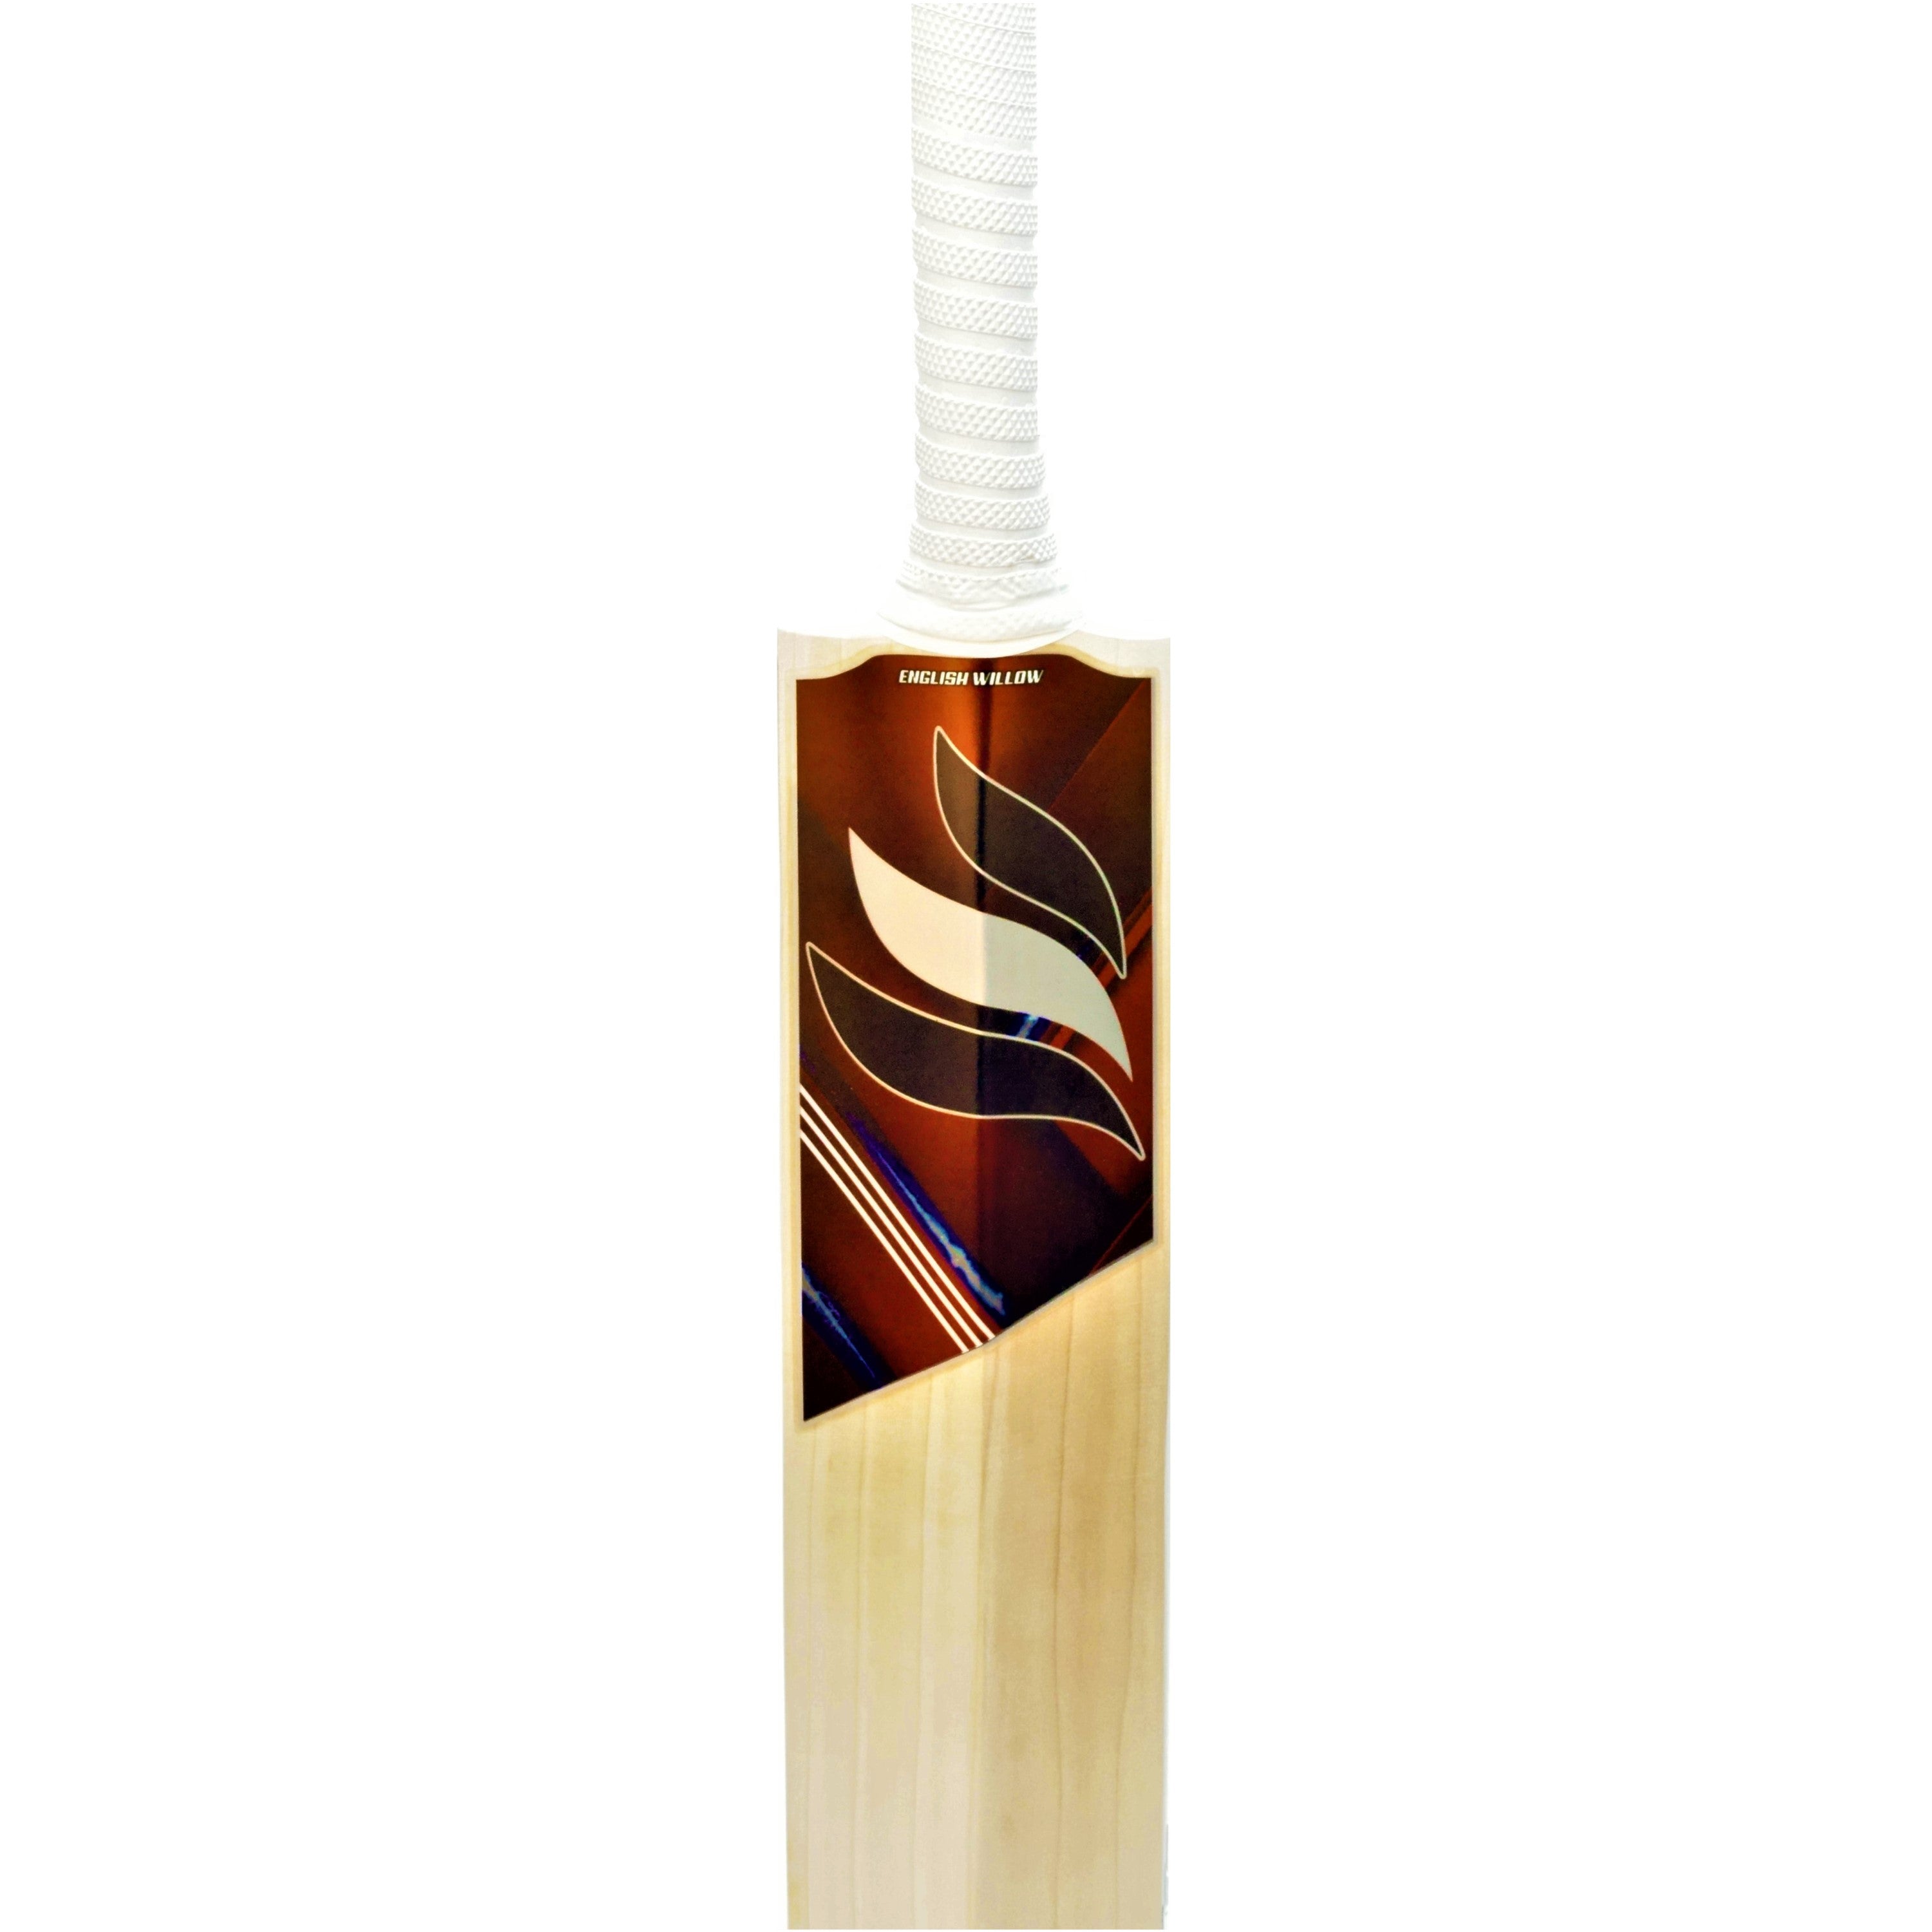 Daio PRO-1000 English willow cricket bat